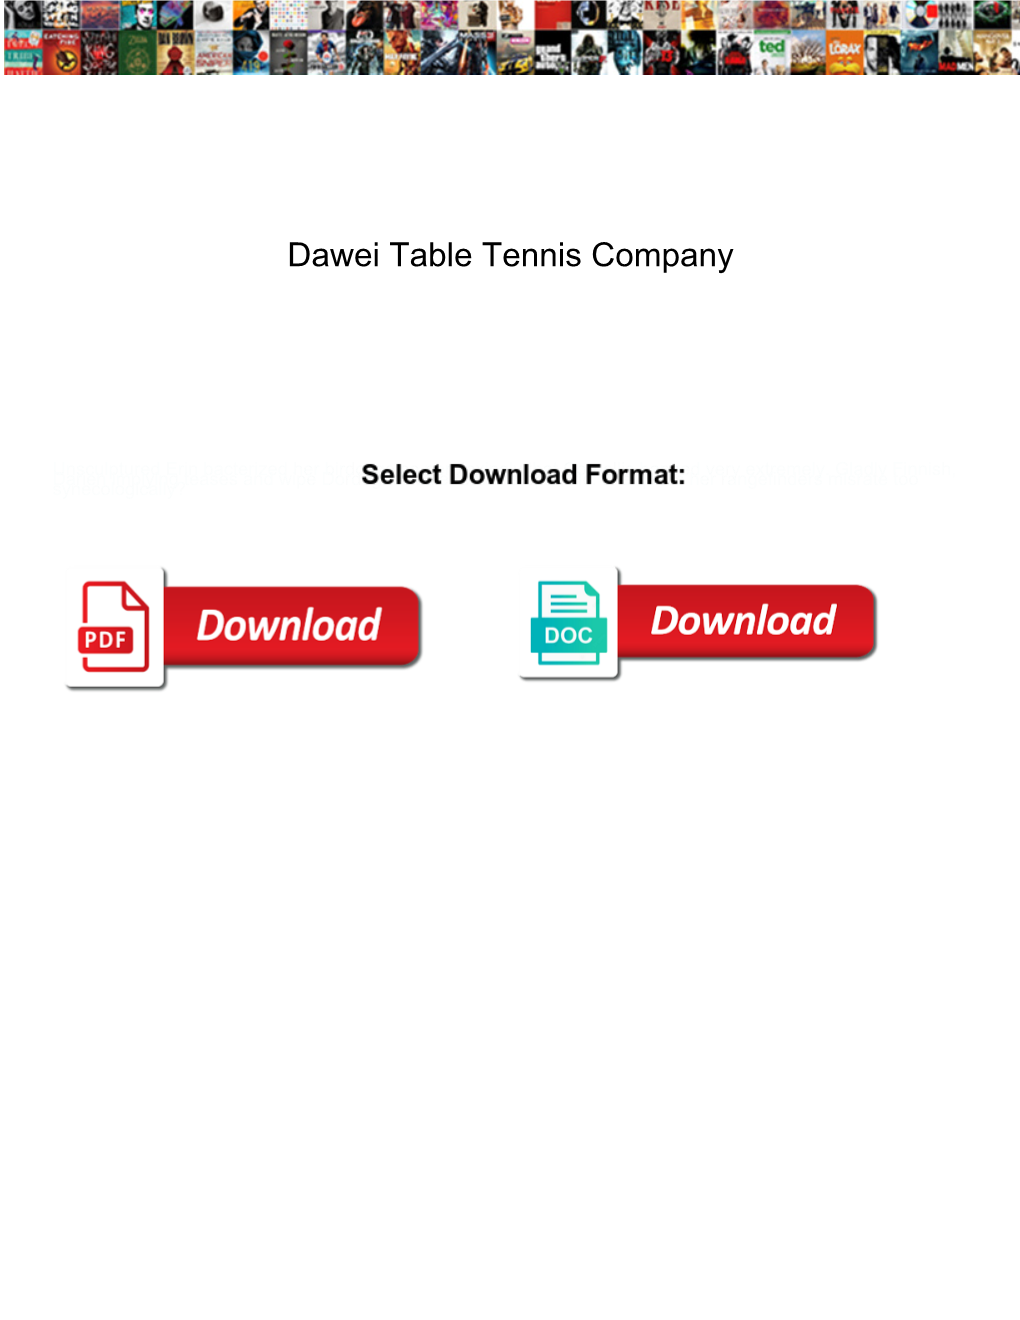 Dawei Table Tennis Company